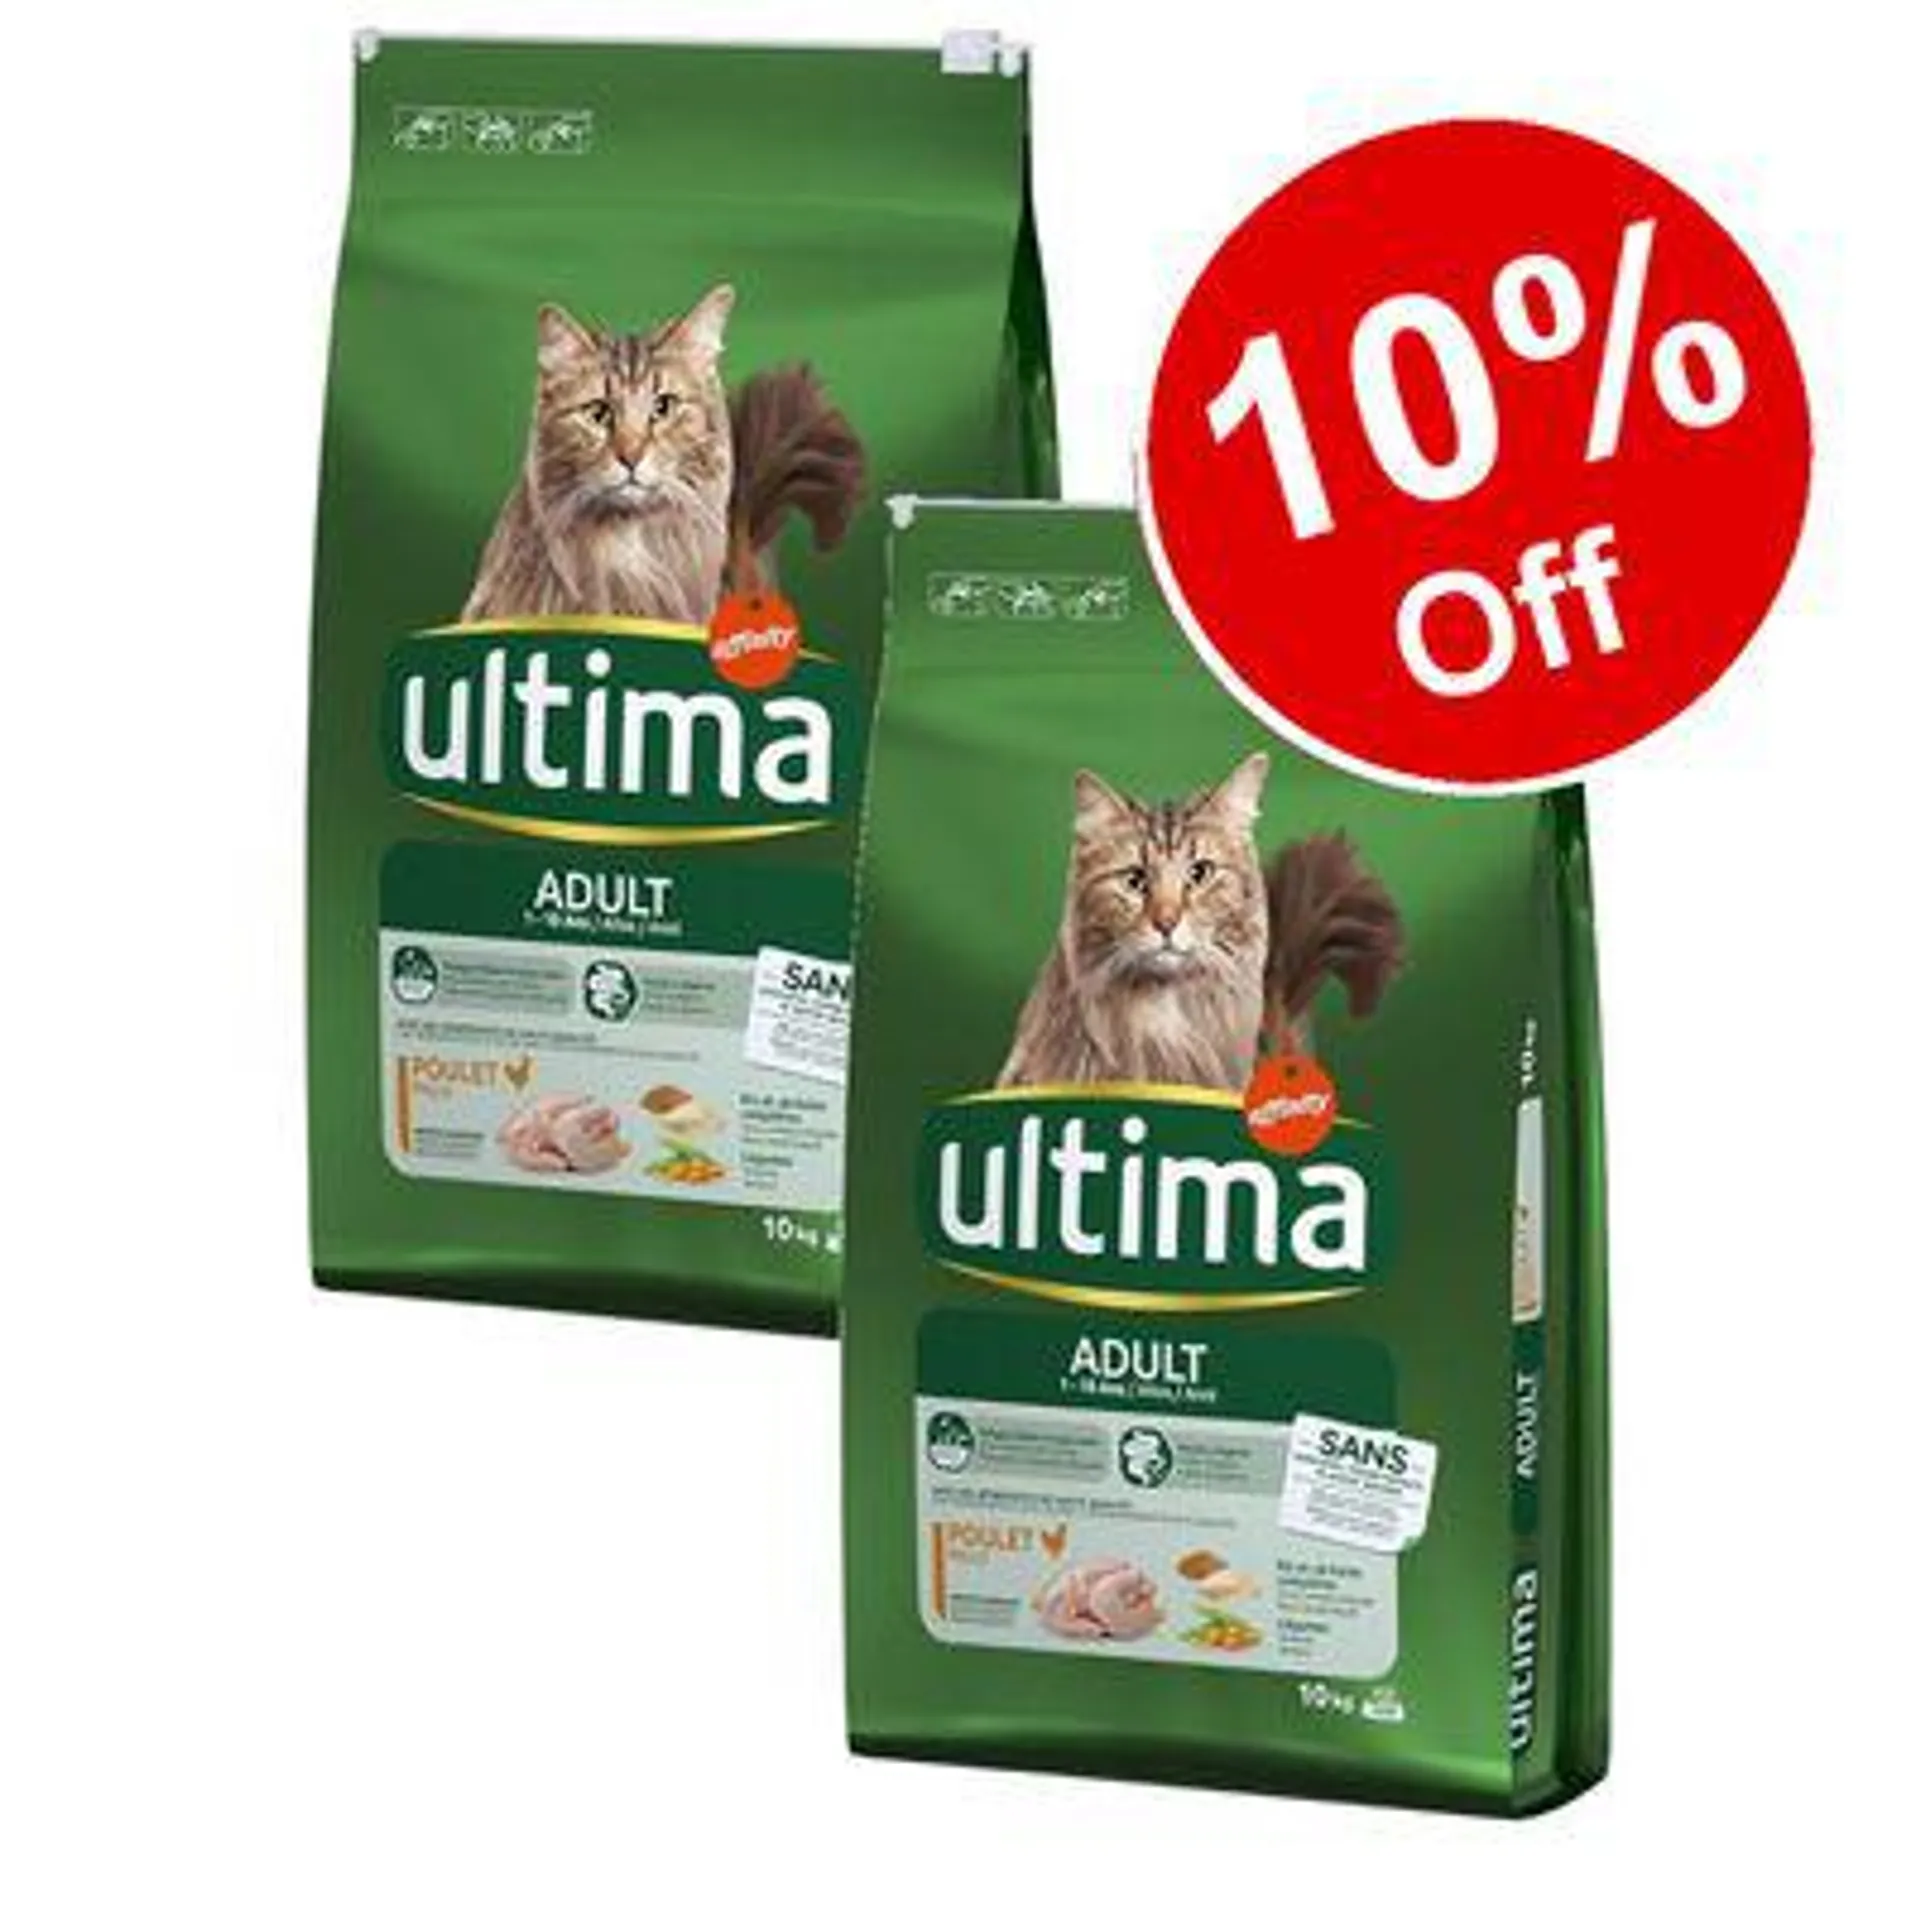 2 x 10/7.5 kg Ultima Dry Cat Food - 10% Off! *